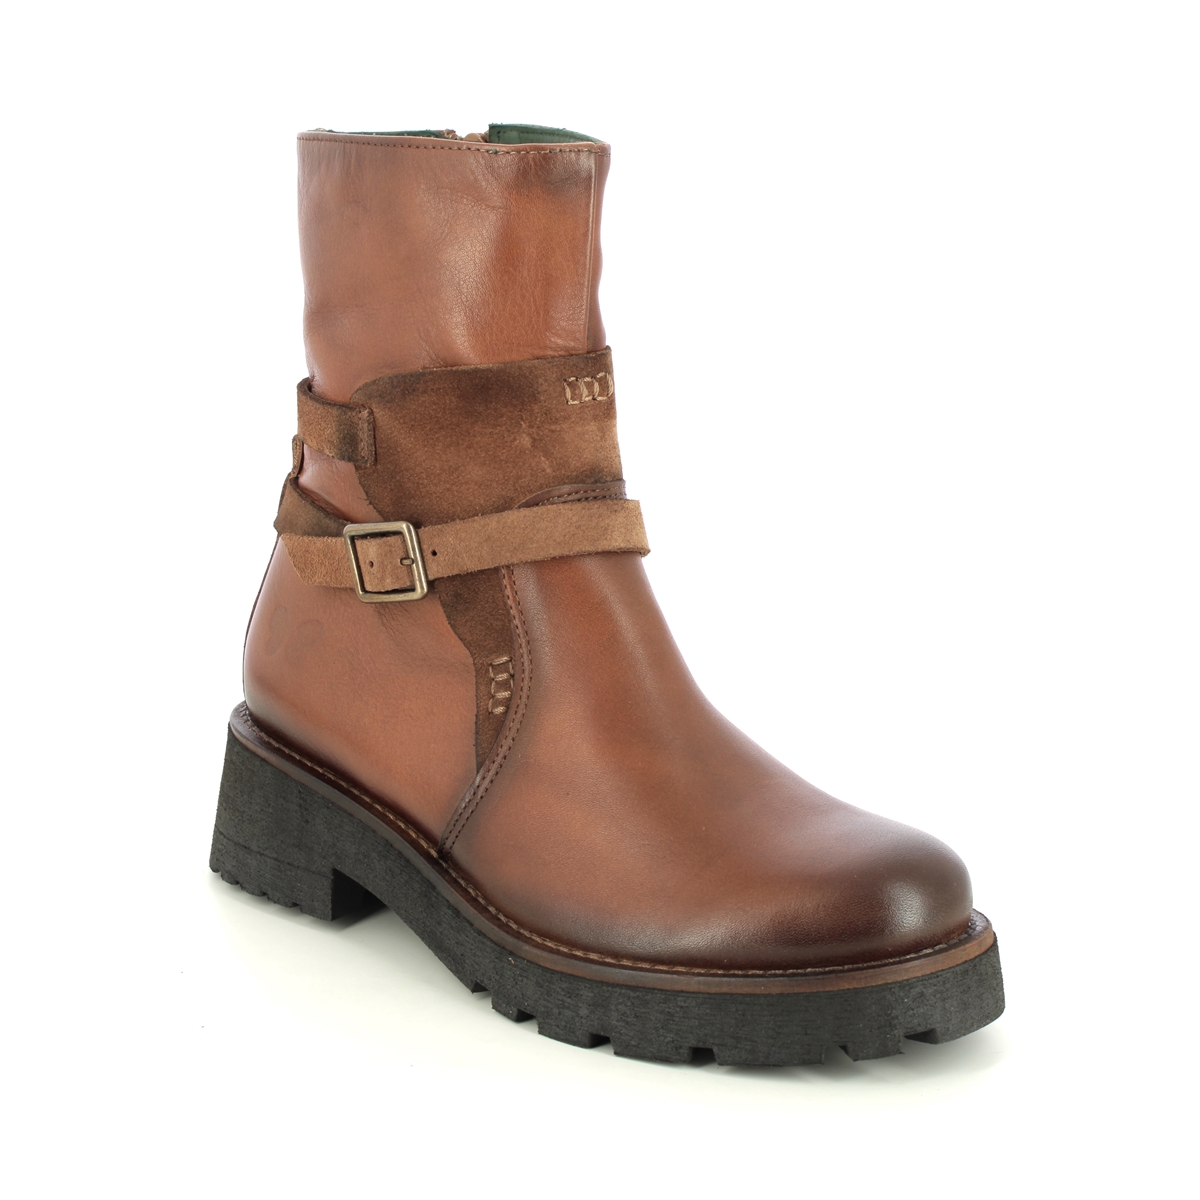 Felmini - Nadir  Strap (Tan Leather ) D550-11 In Size 38 In Plain Tan Leather